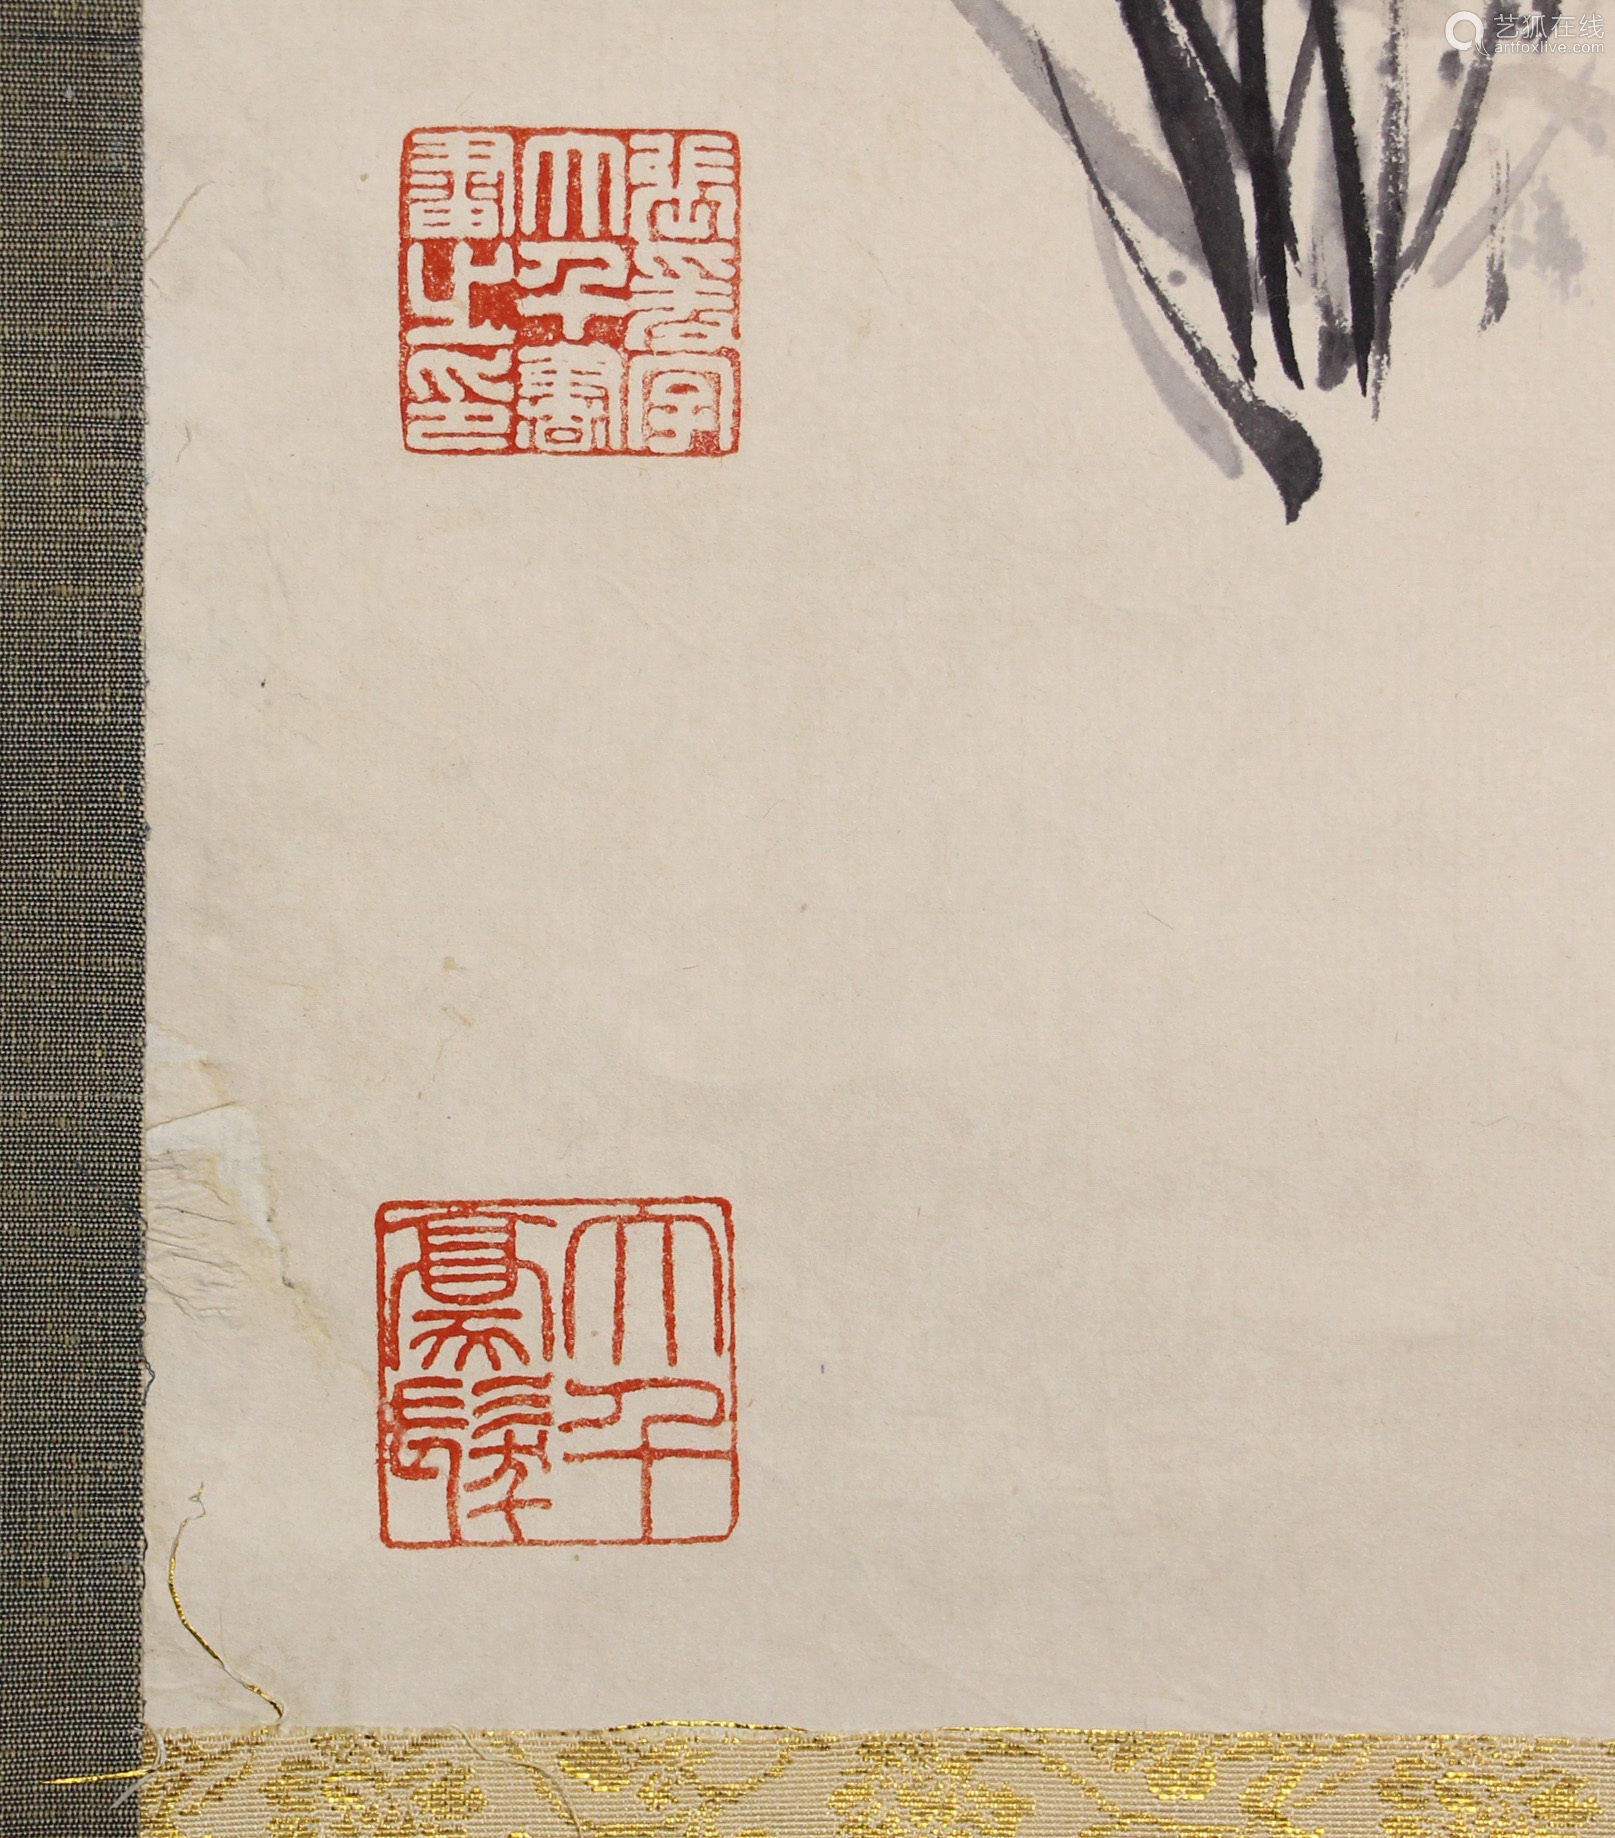 Chinese ink painting,
Zhang Daqian's flower paintings